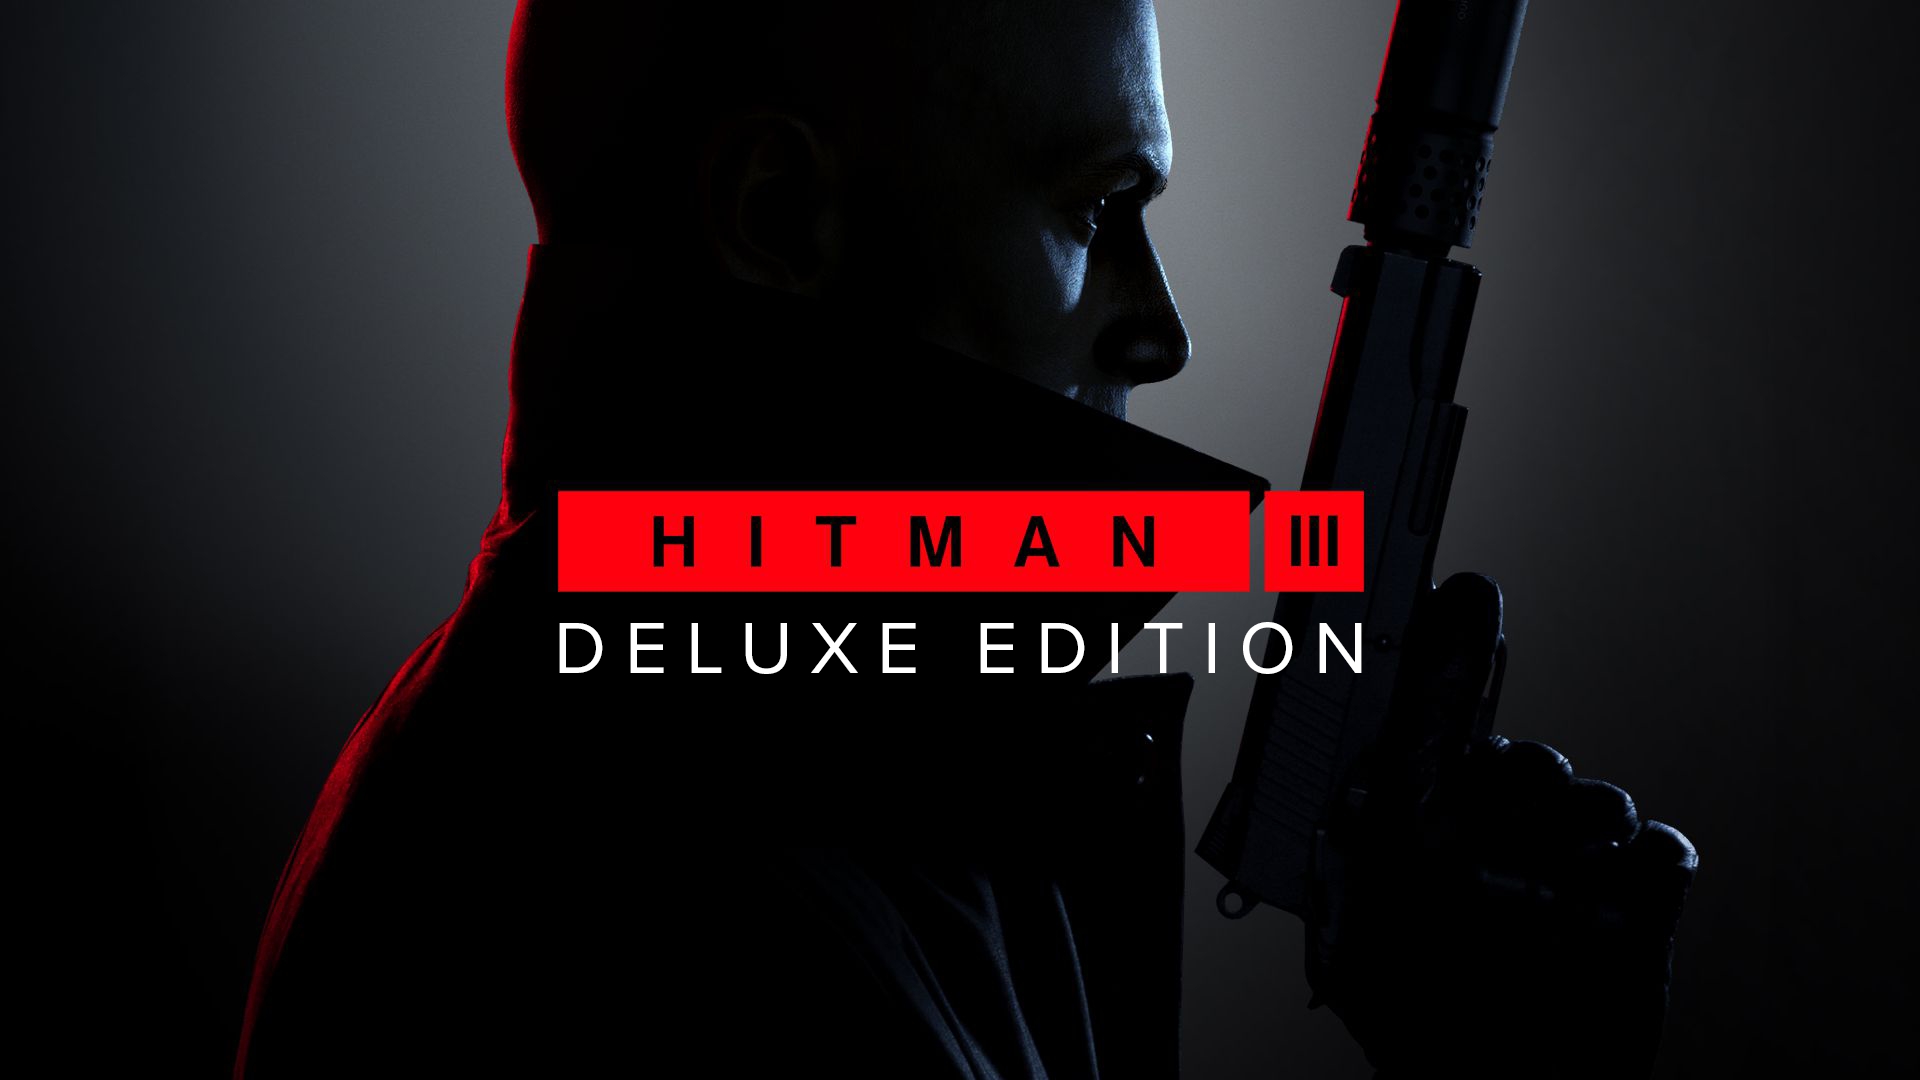 Hitman 3 Deluxe Edition. Hitman World of Assassination. Hitman 3 World of Assassination. Hitman World of Assassination - Deluxe Edition.